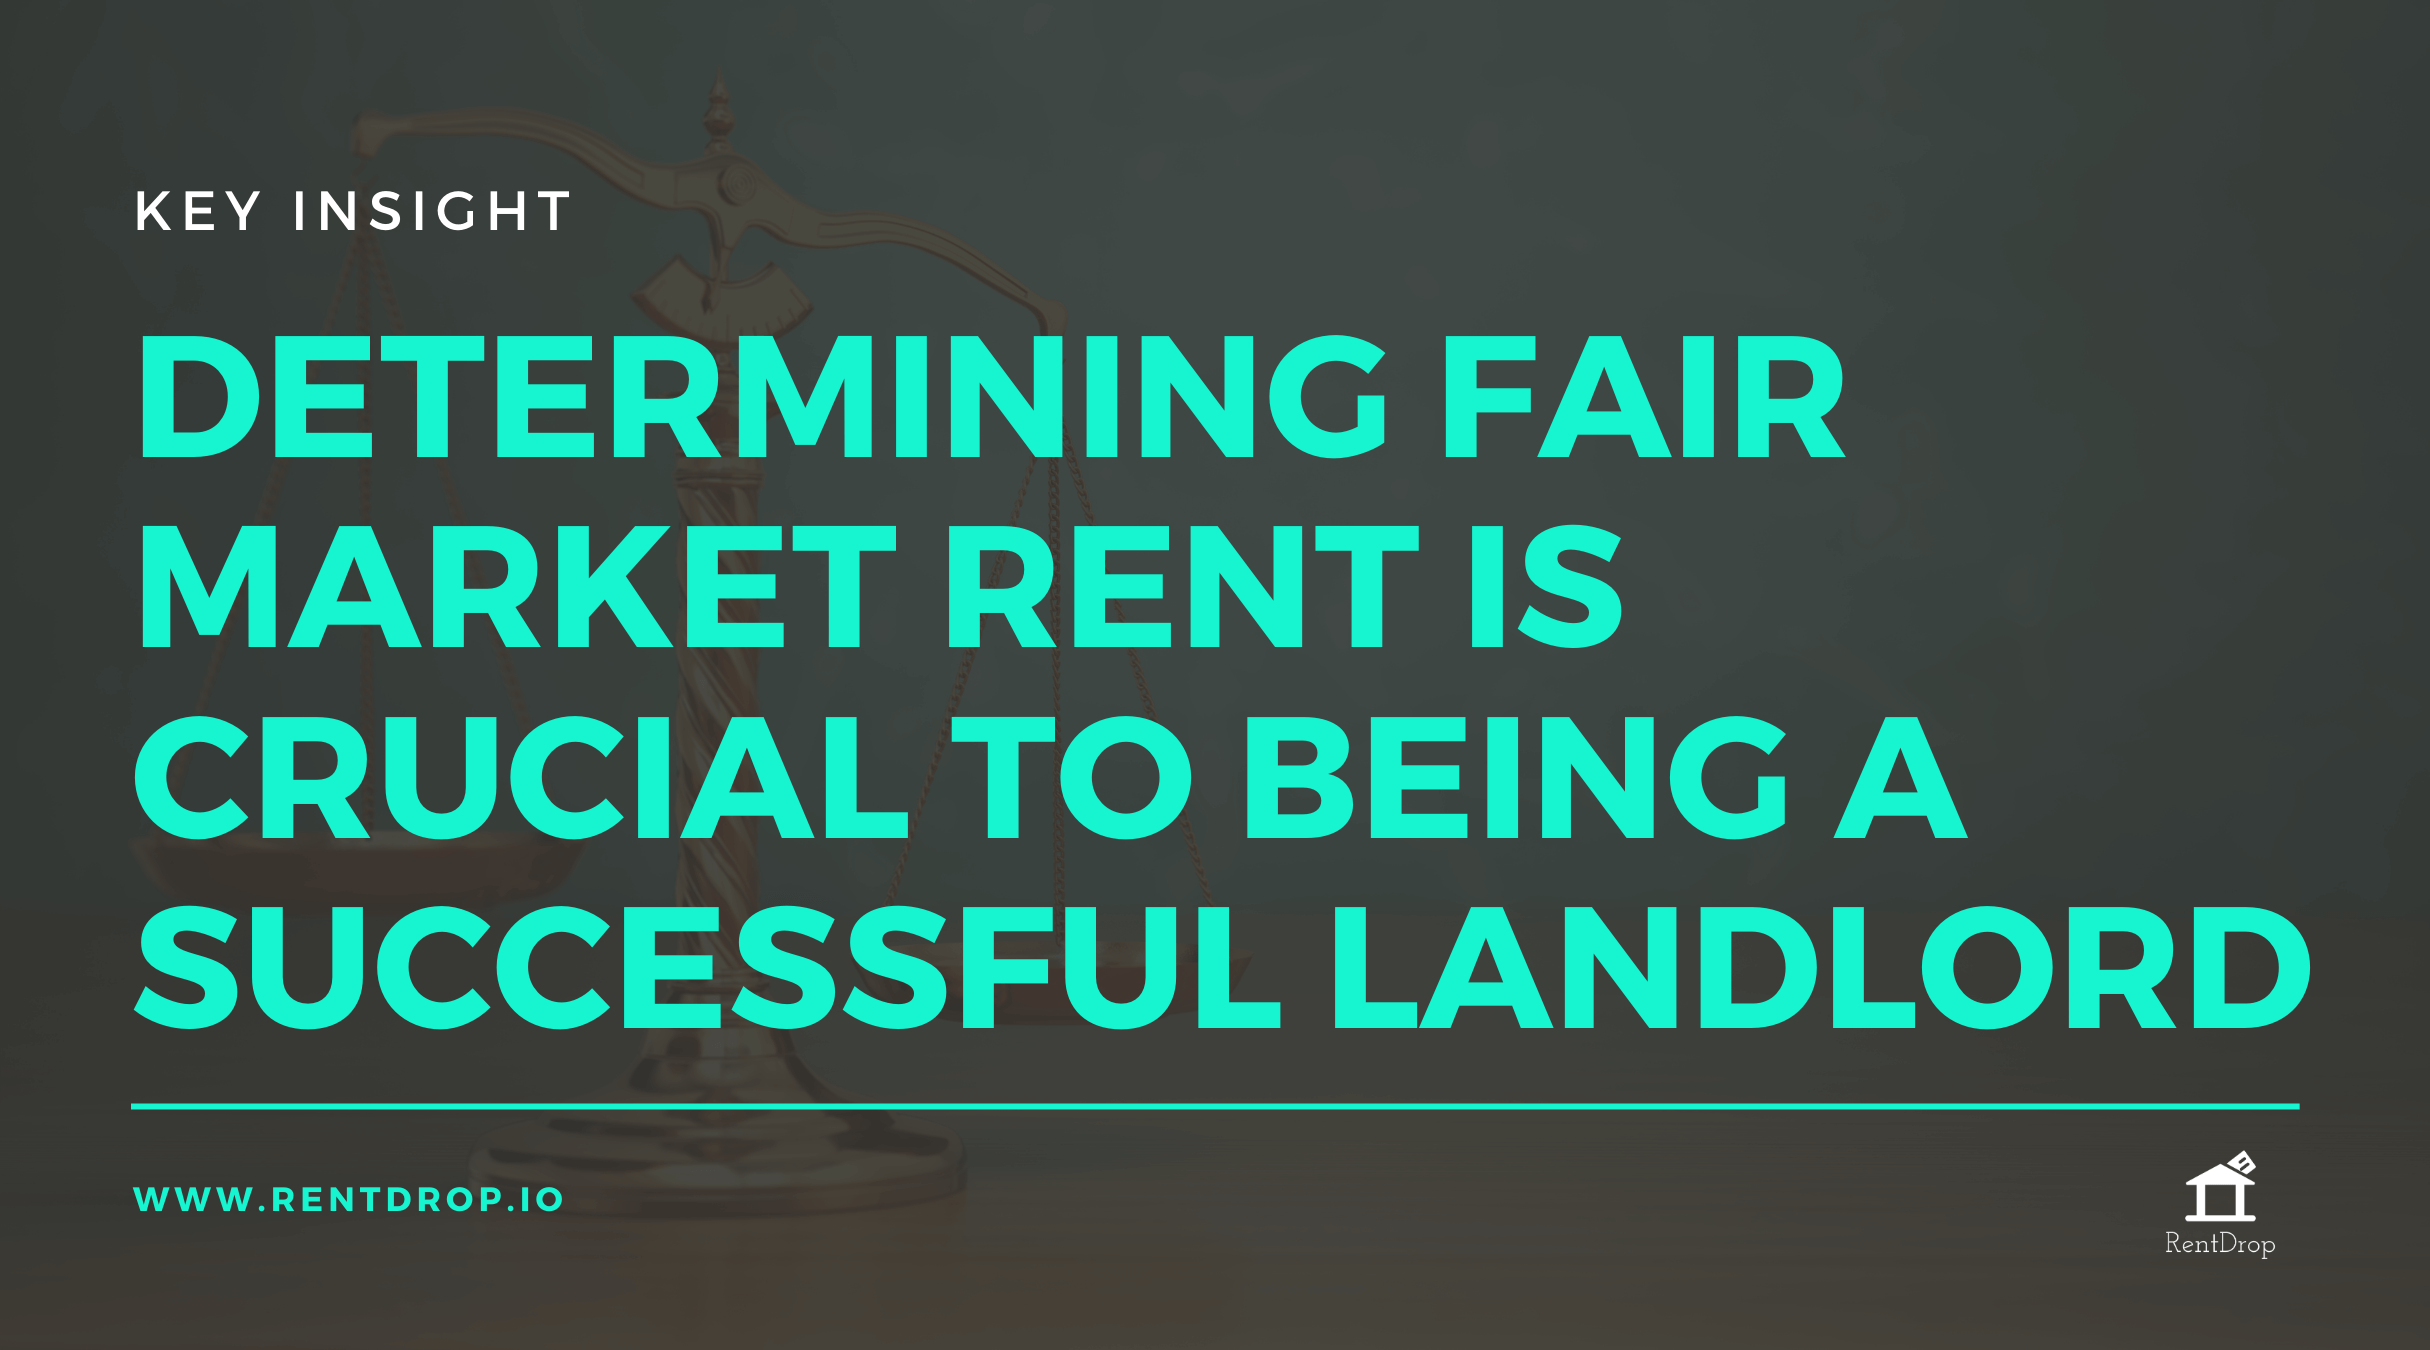 rentdrop Fair Market Rent key insight